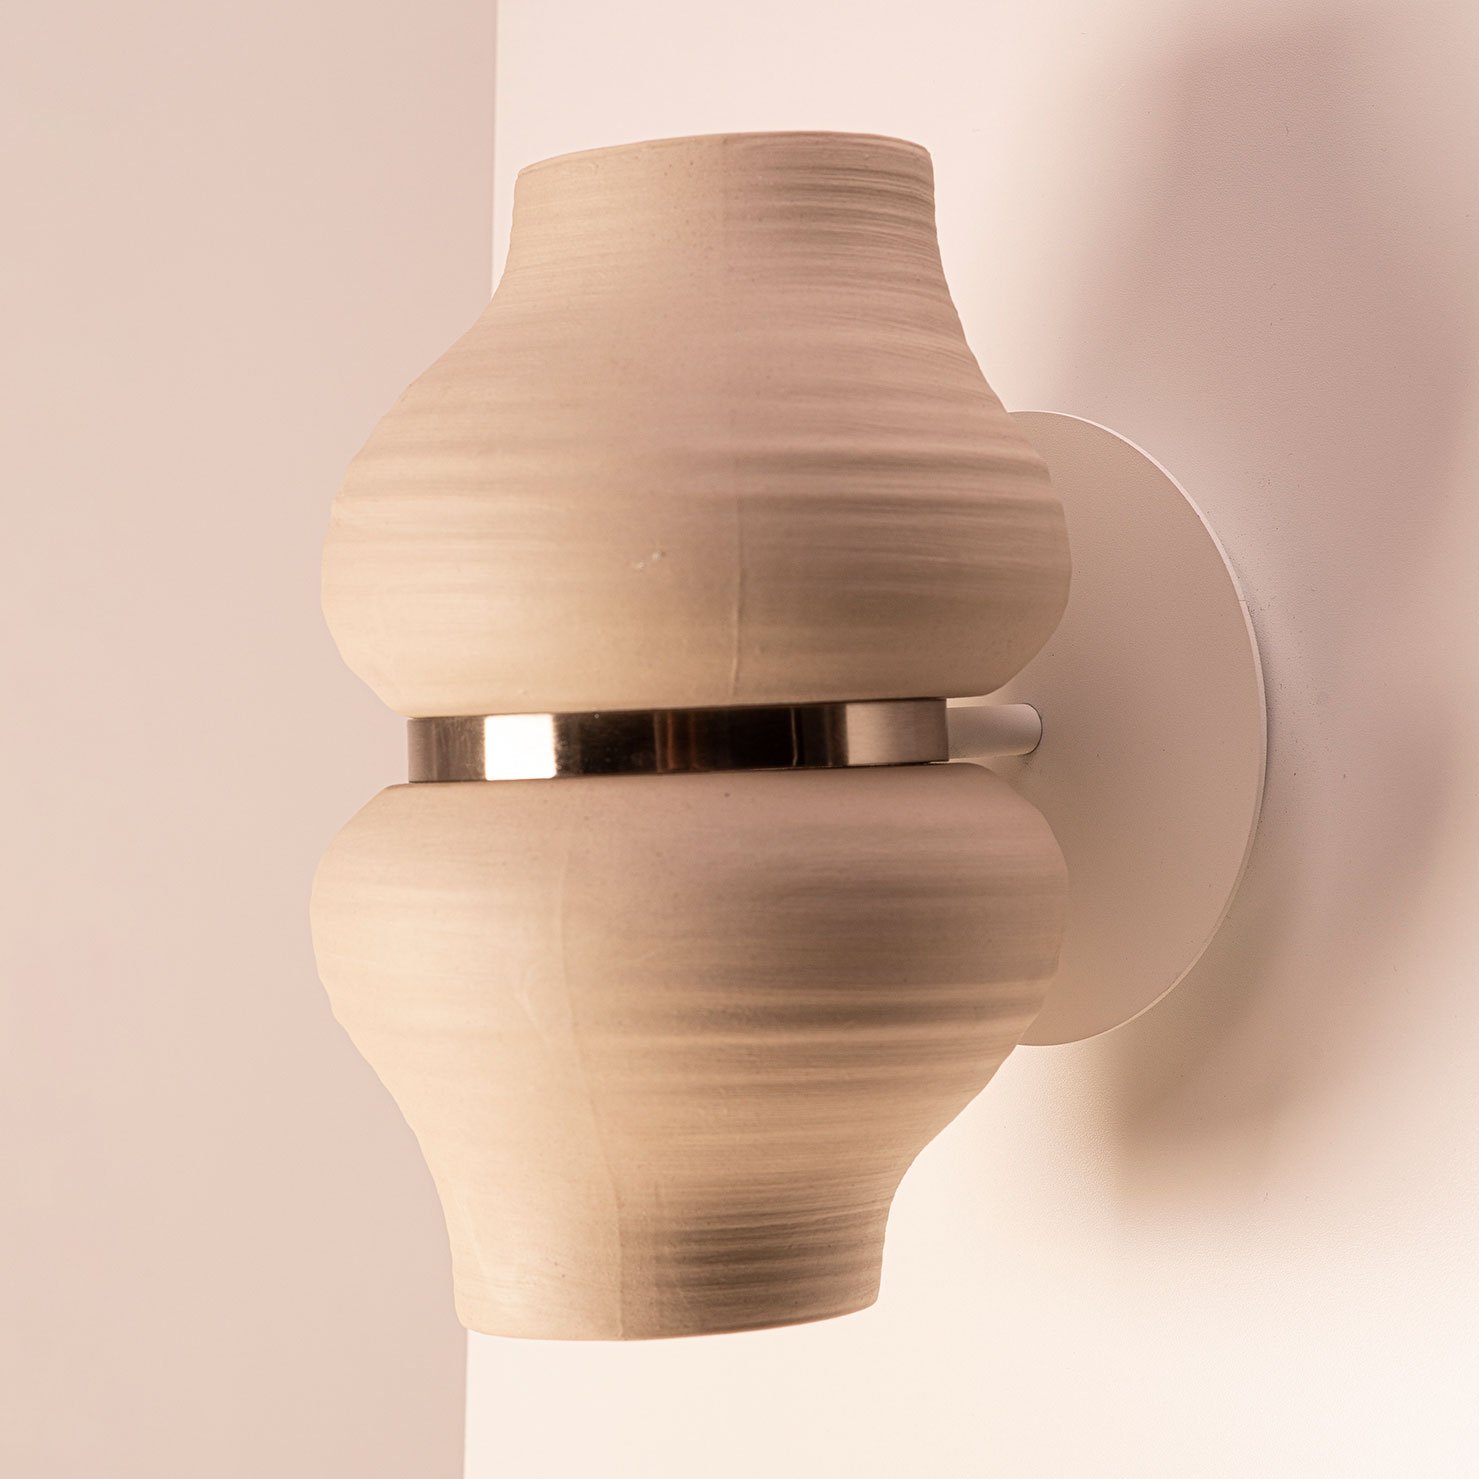 lampara aplique nudo ceramica minimo diseño iluminacion